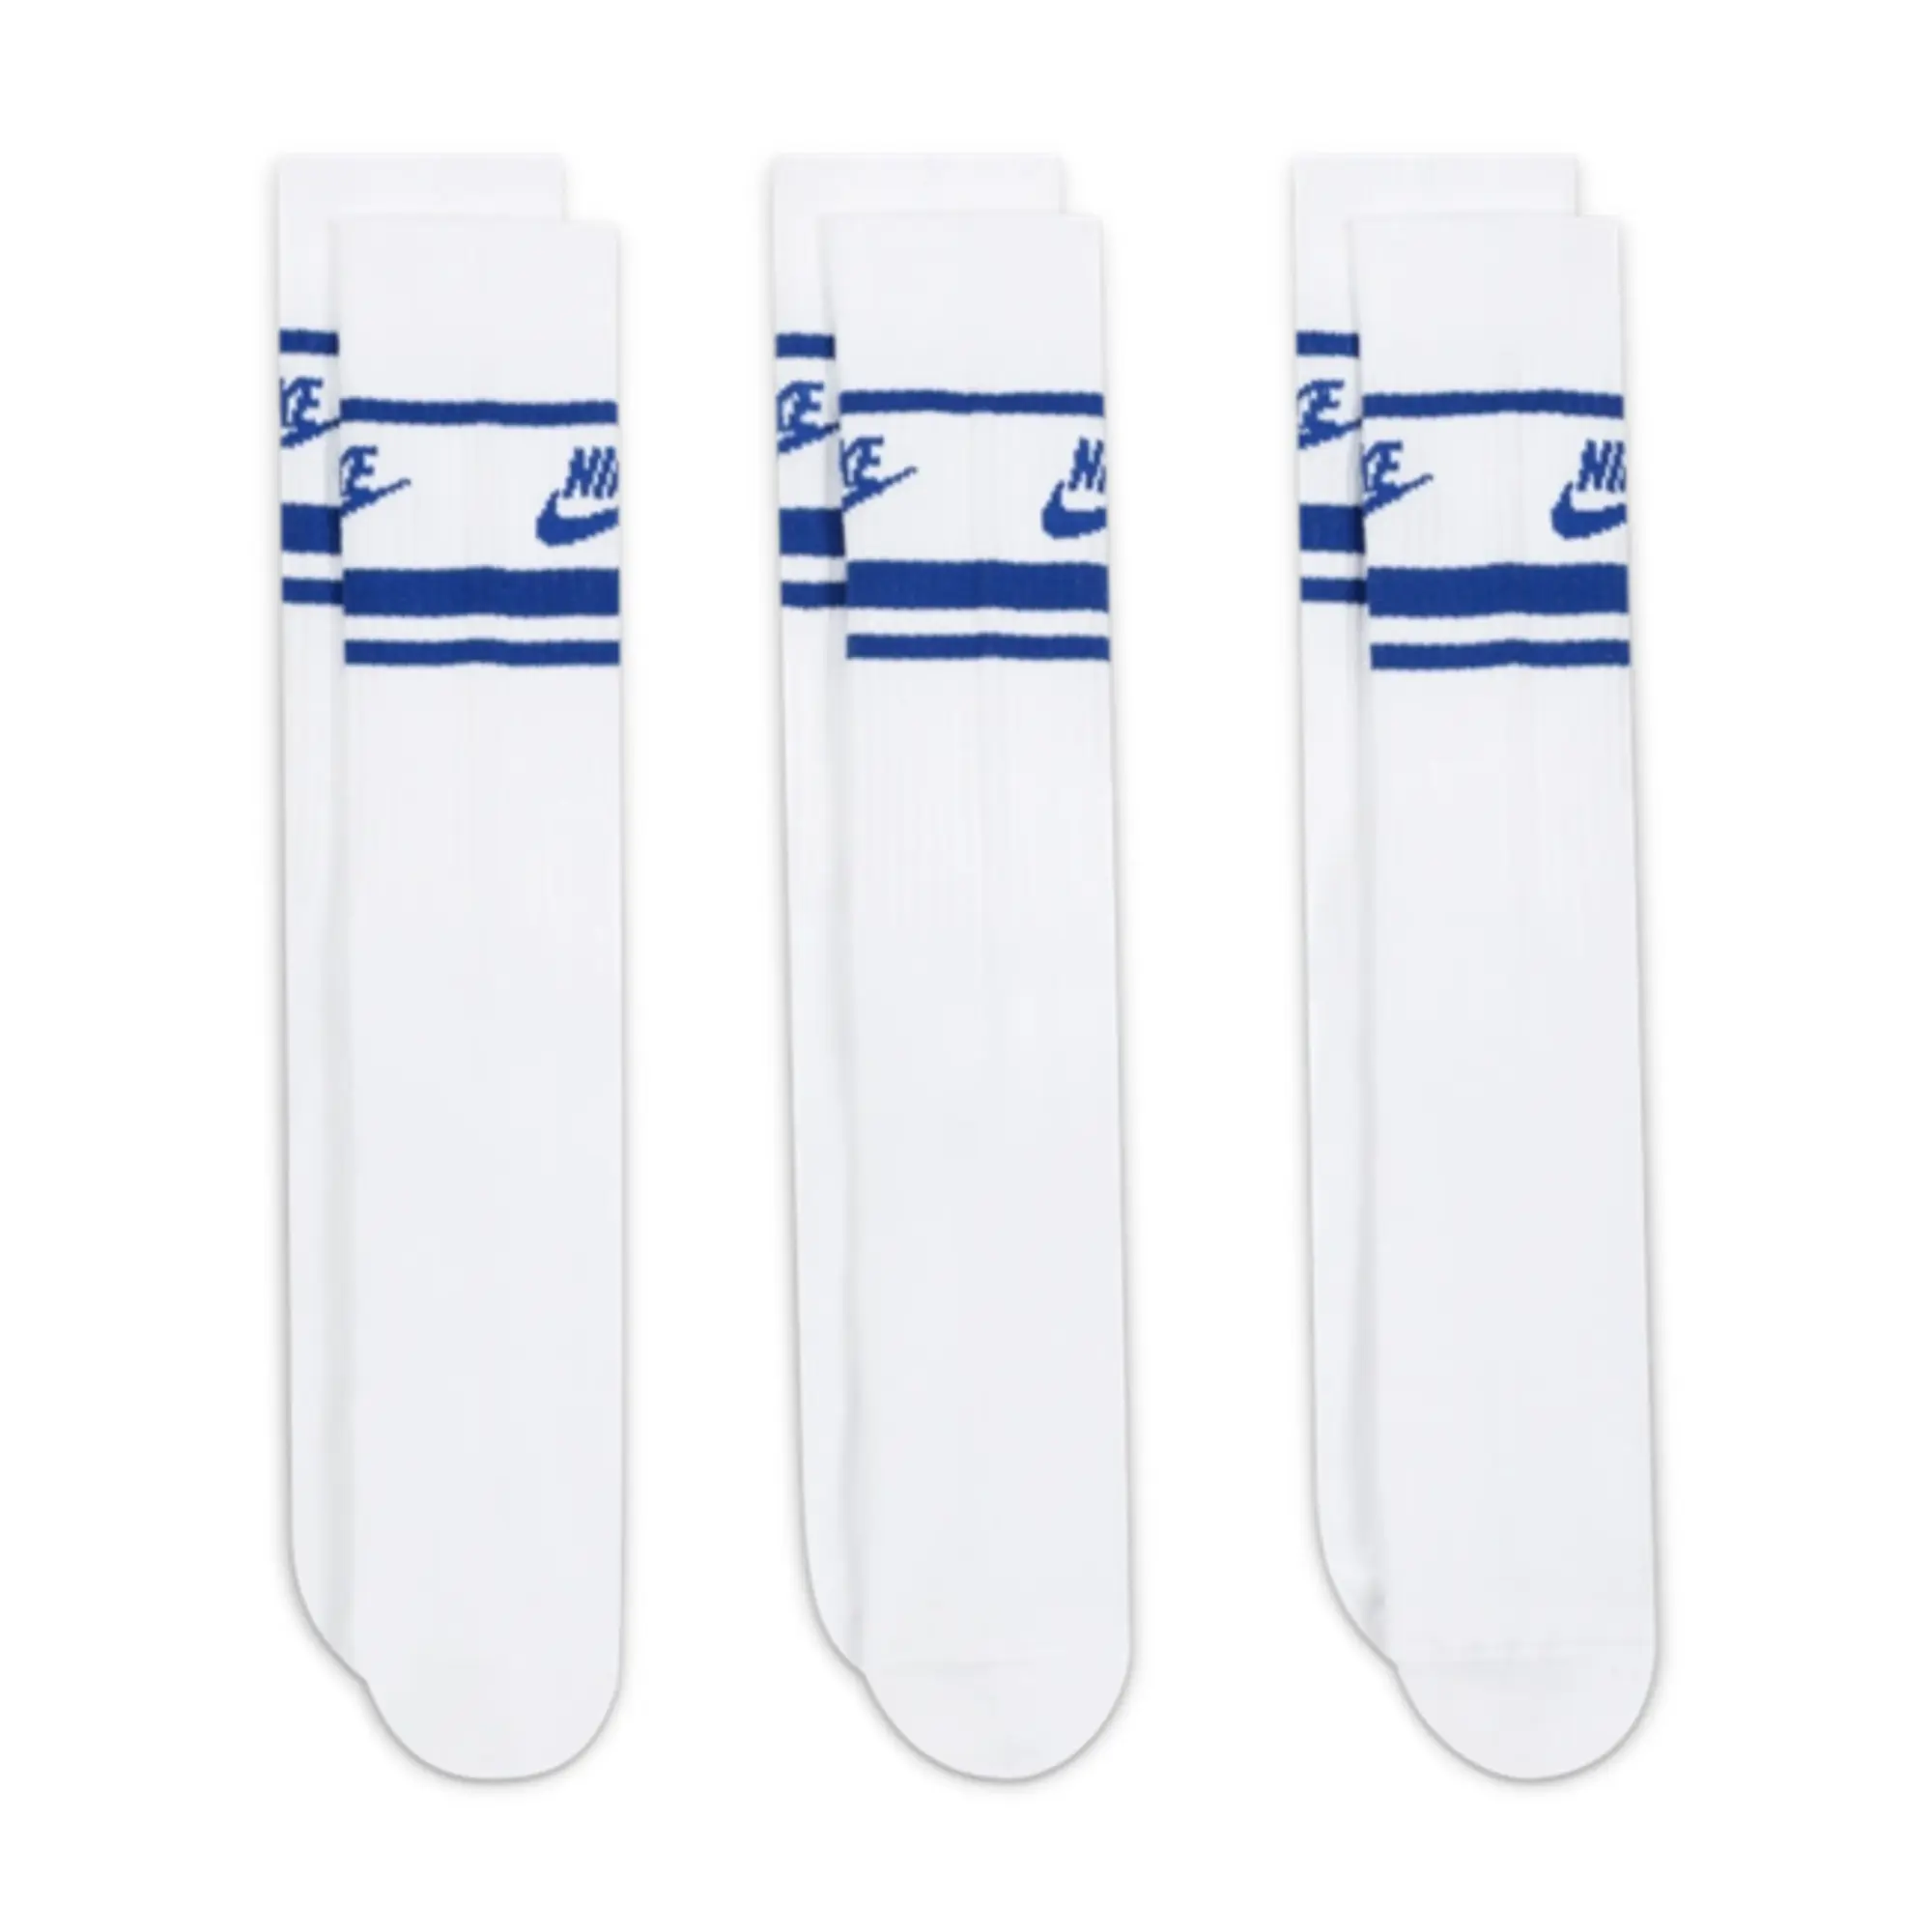 Nike Sportswear Dri-FIT Everyday Essential Crew Socks (3 Pairs) - White